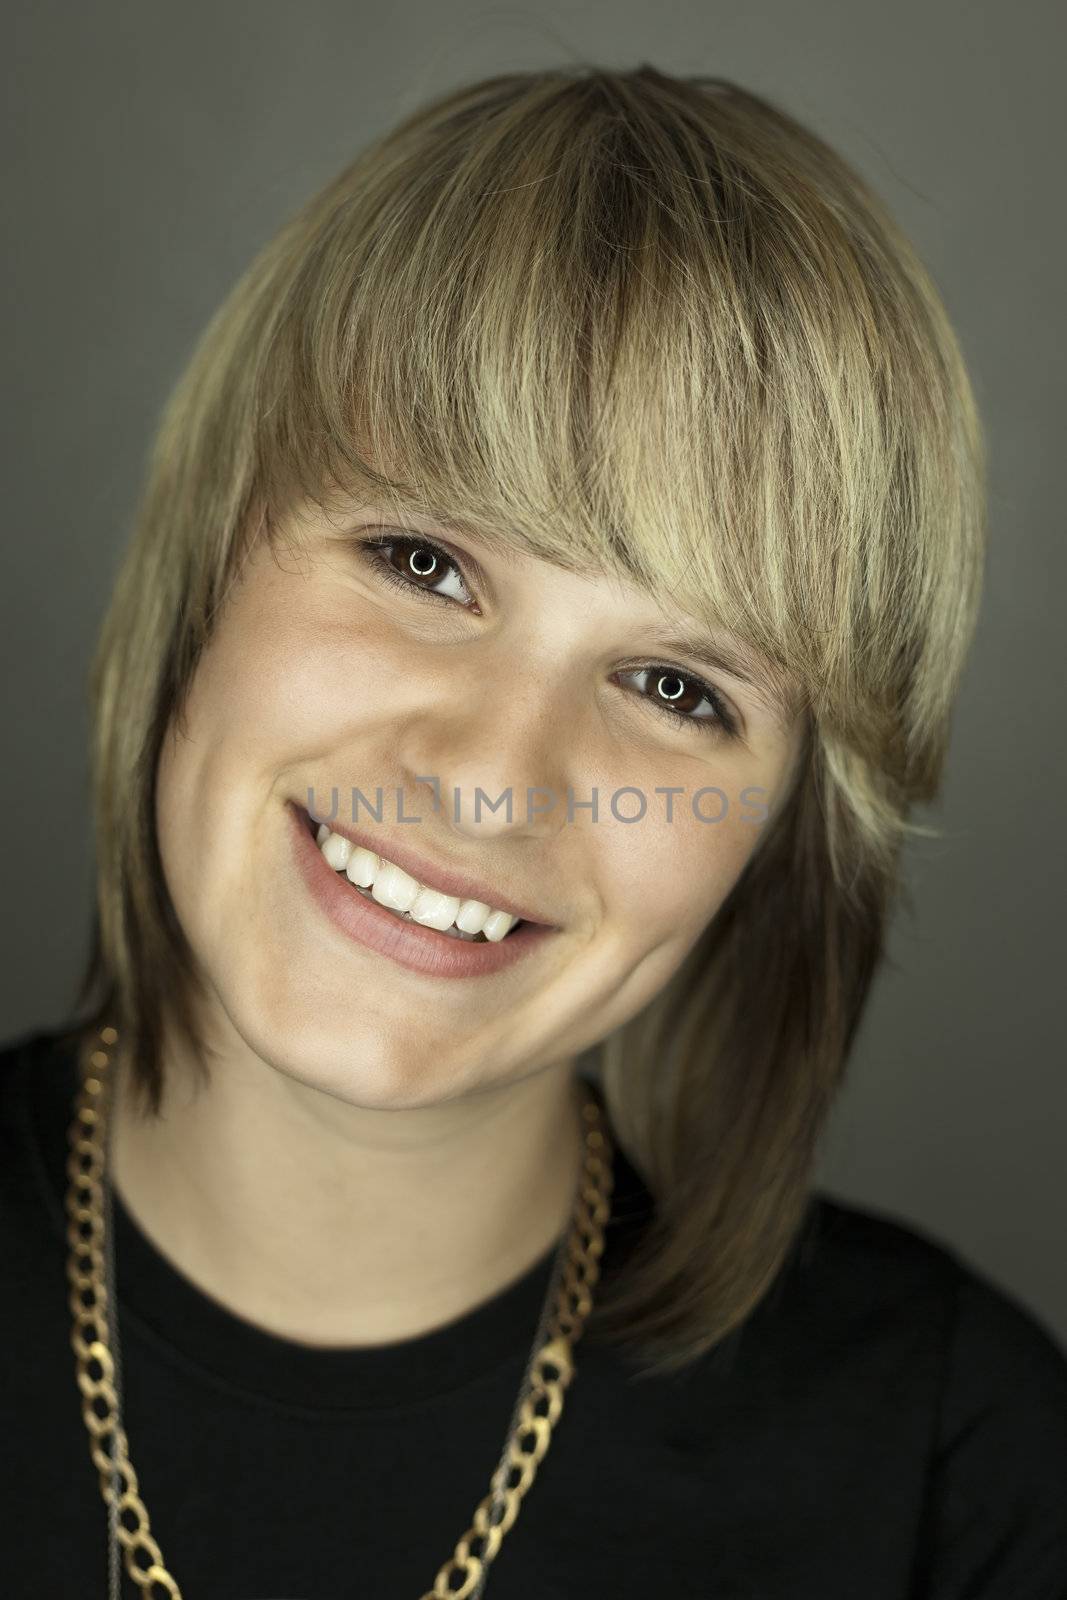 An image of a beautiful smiling teen girl